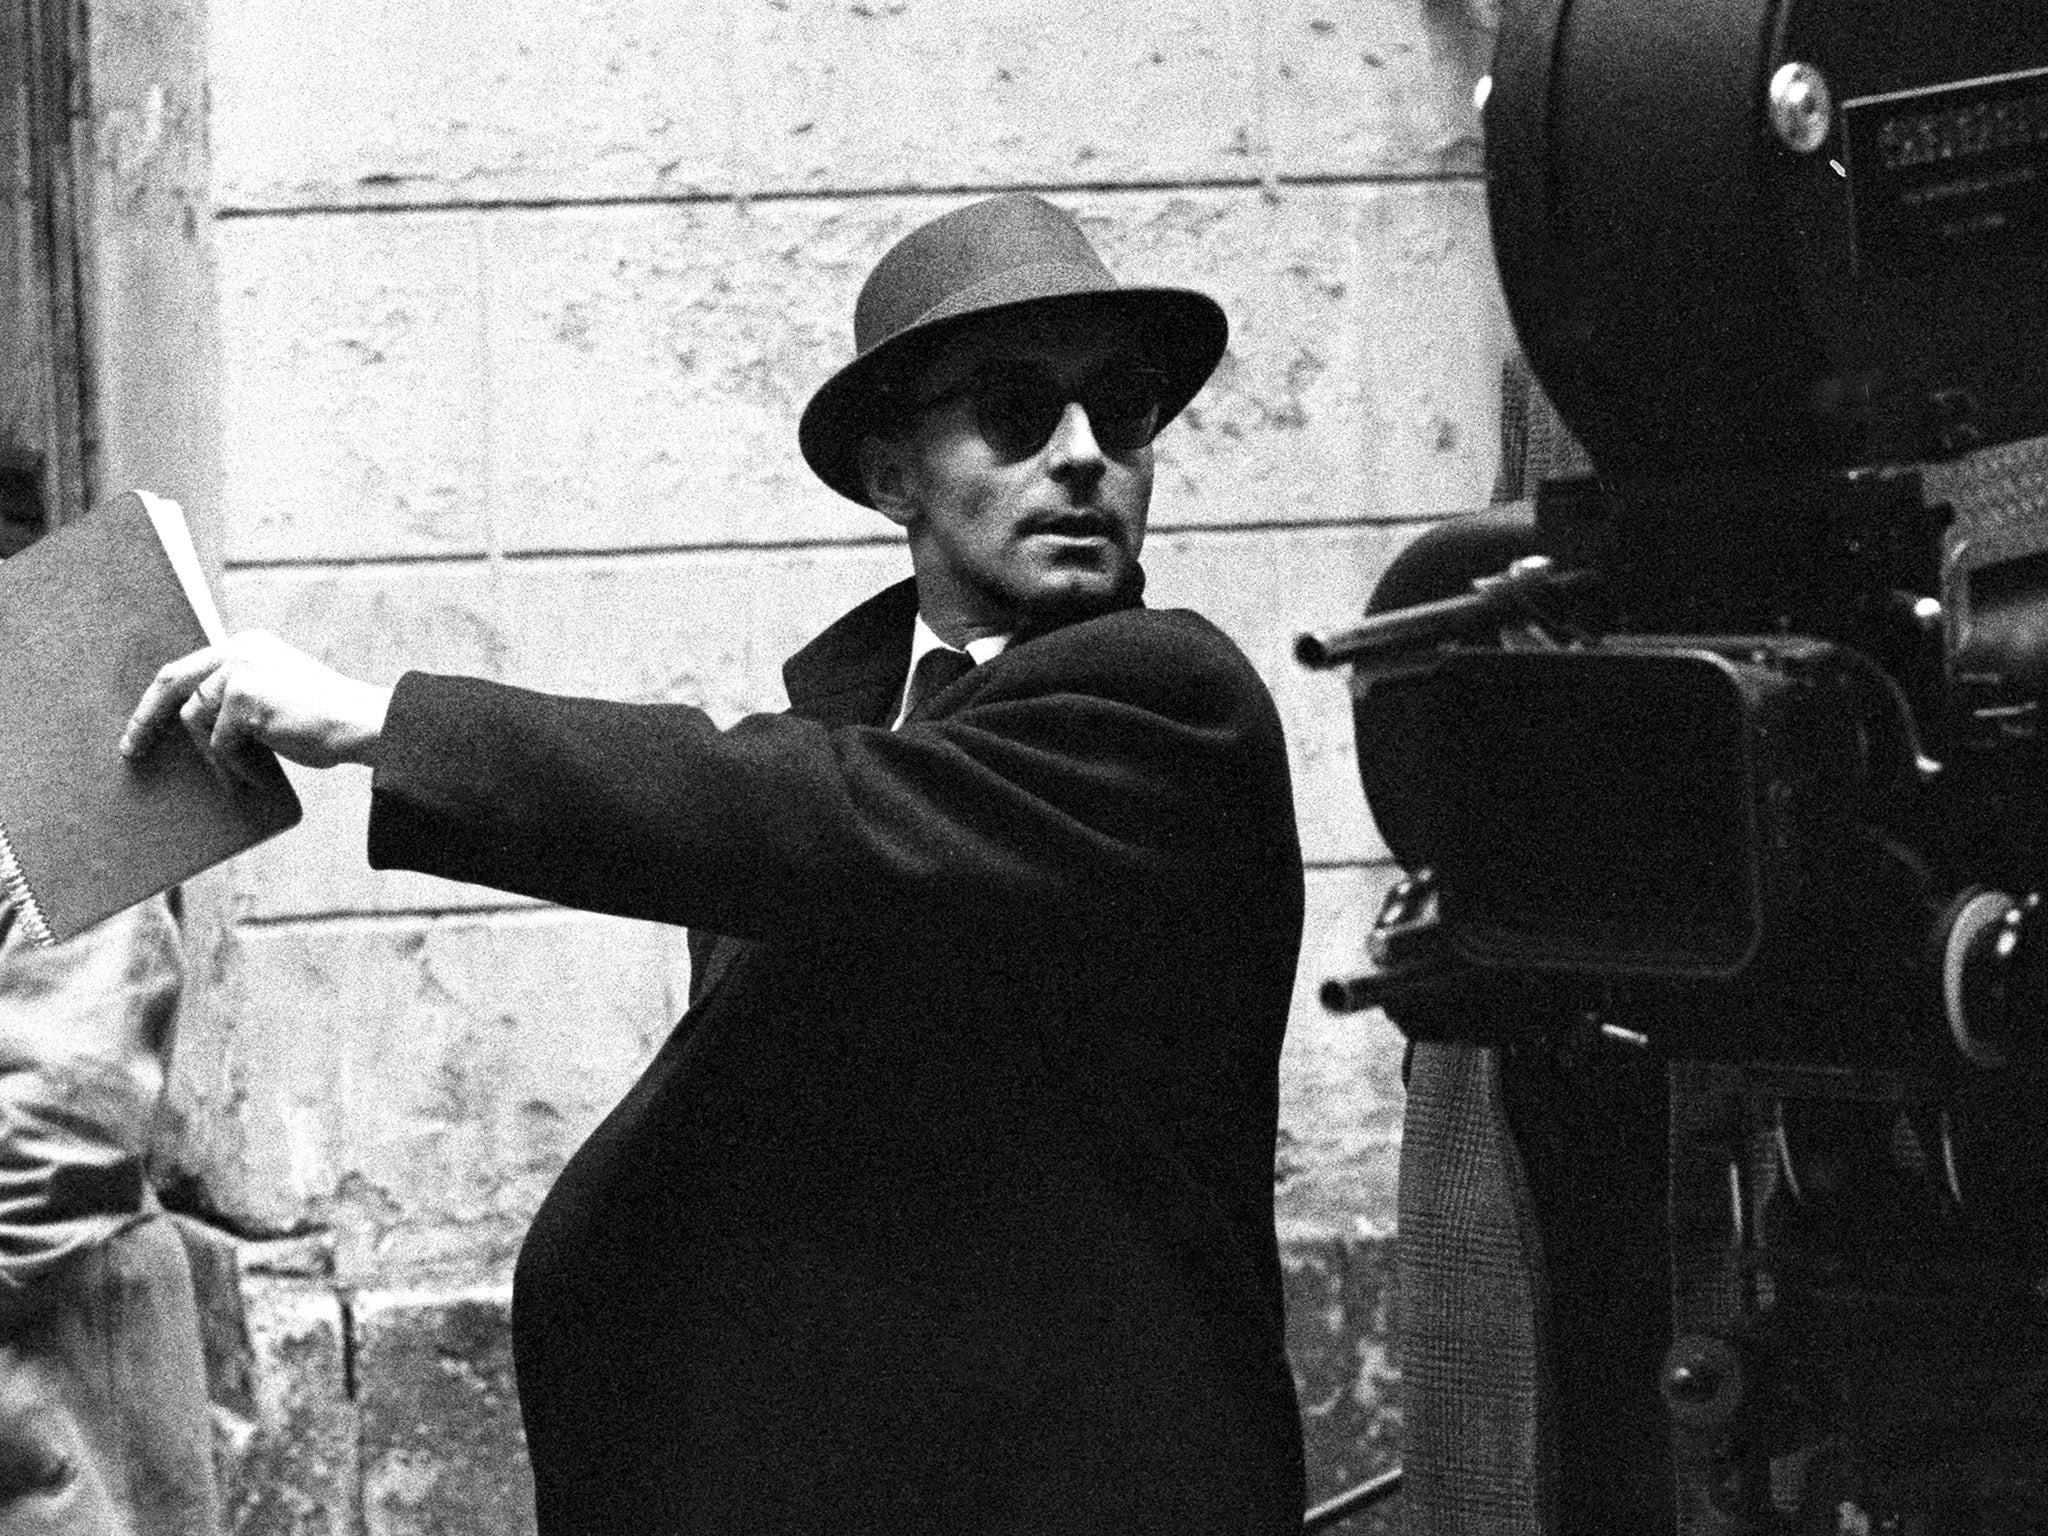 Jean-Luc Godard - Wikipedia